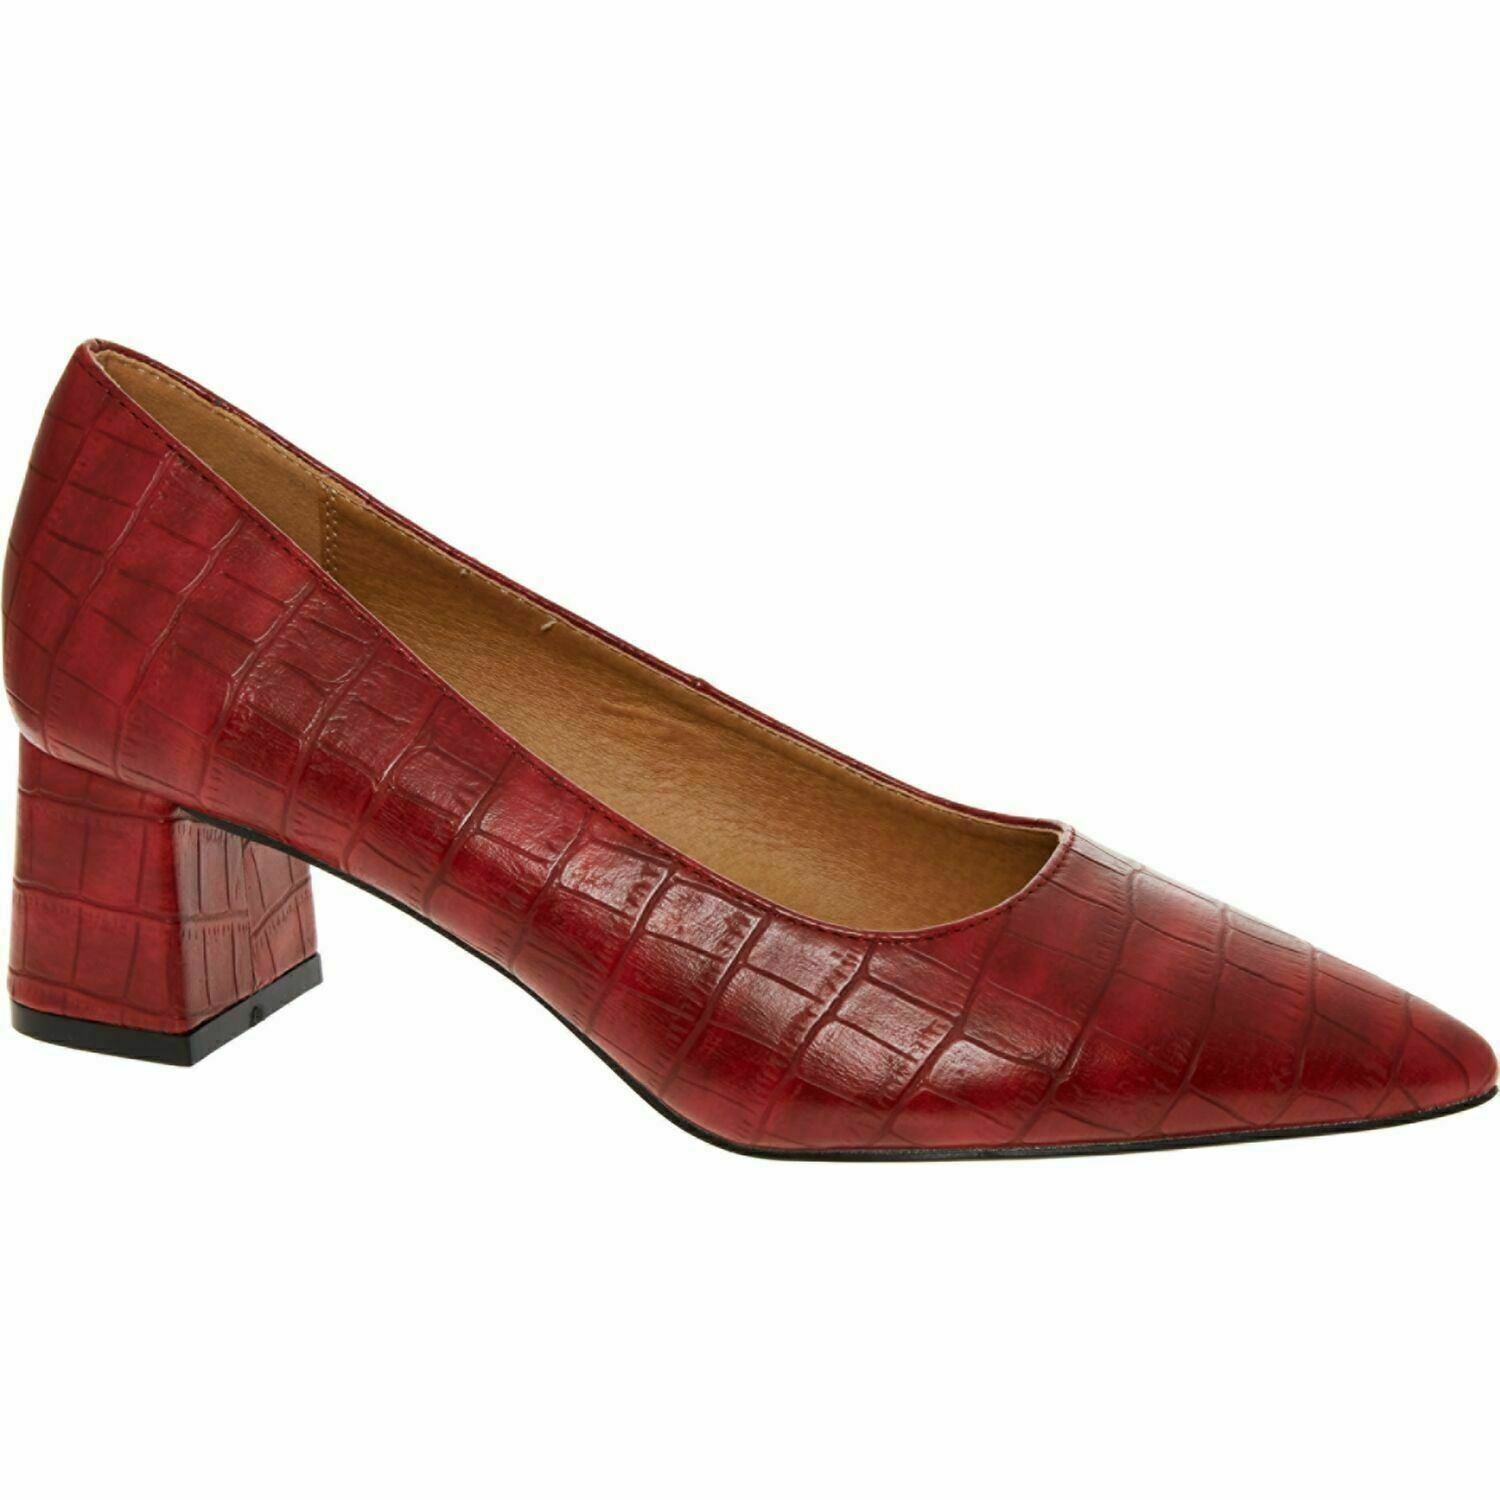 AZAREY Women's Red Moc Croc Heeled Pumps Court Shoes, size UK 5 / EU 38